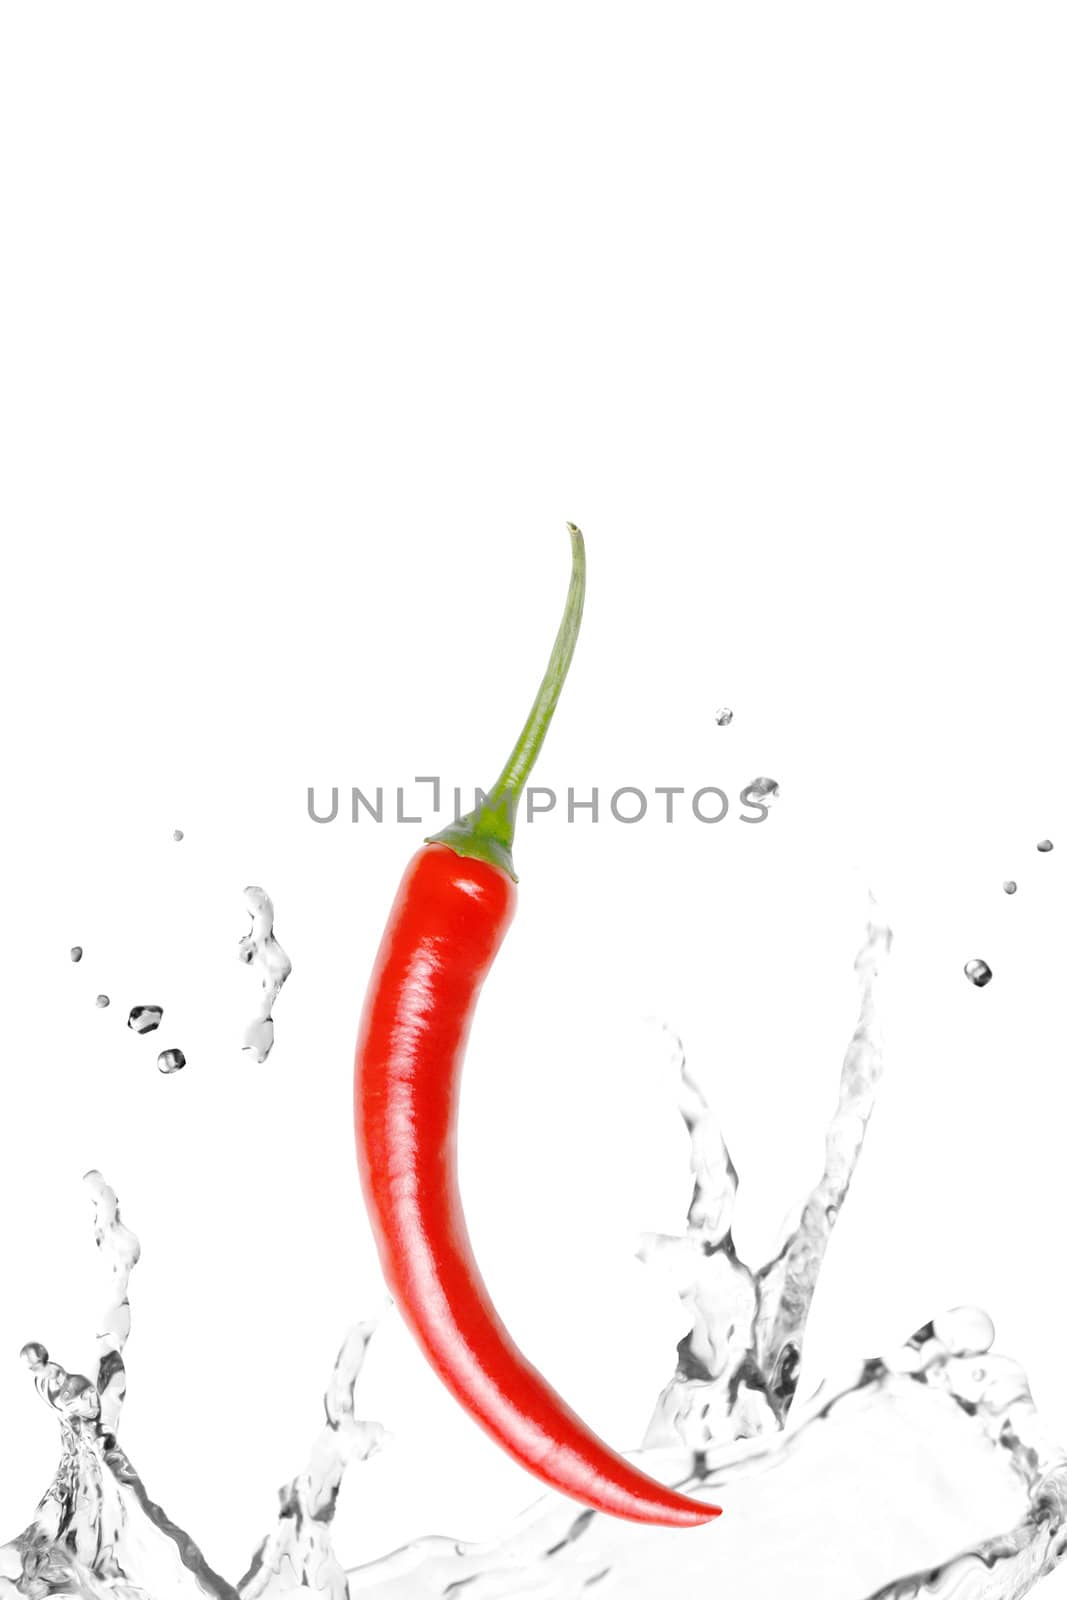 A fresh chili pepper